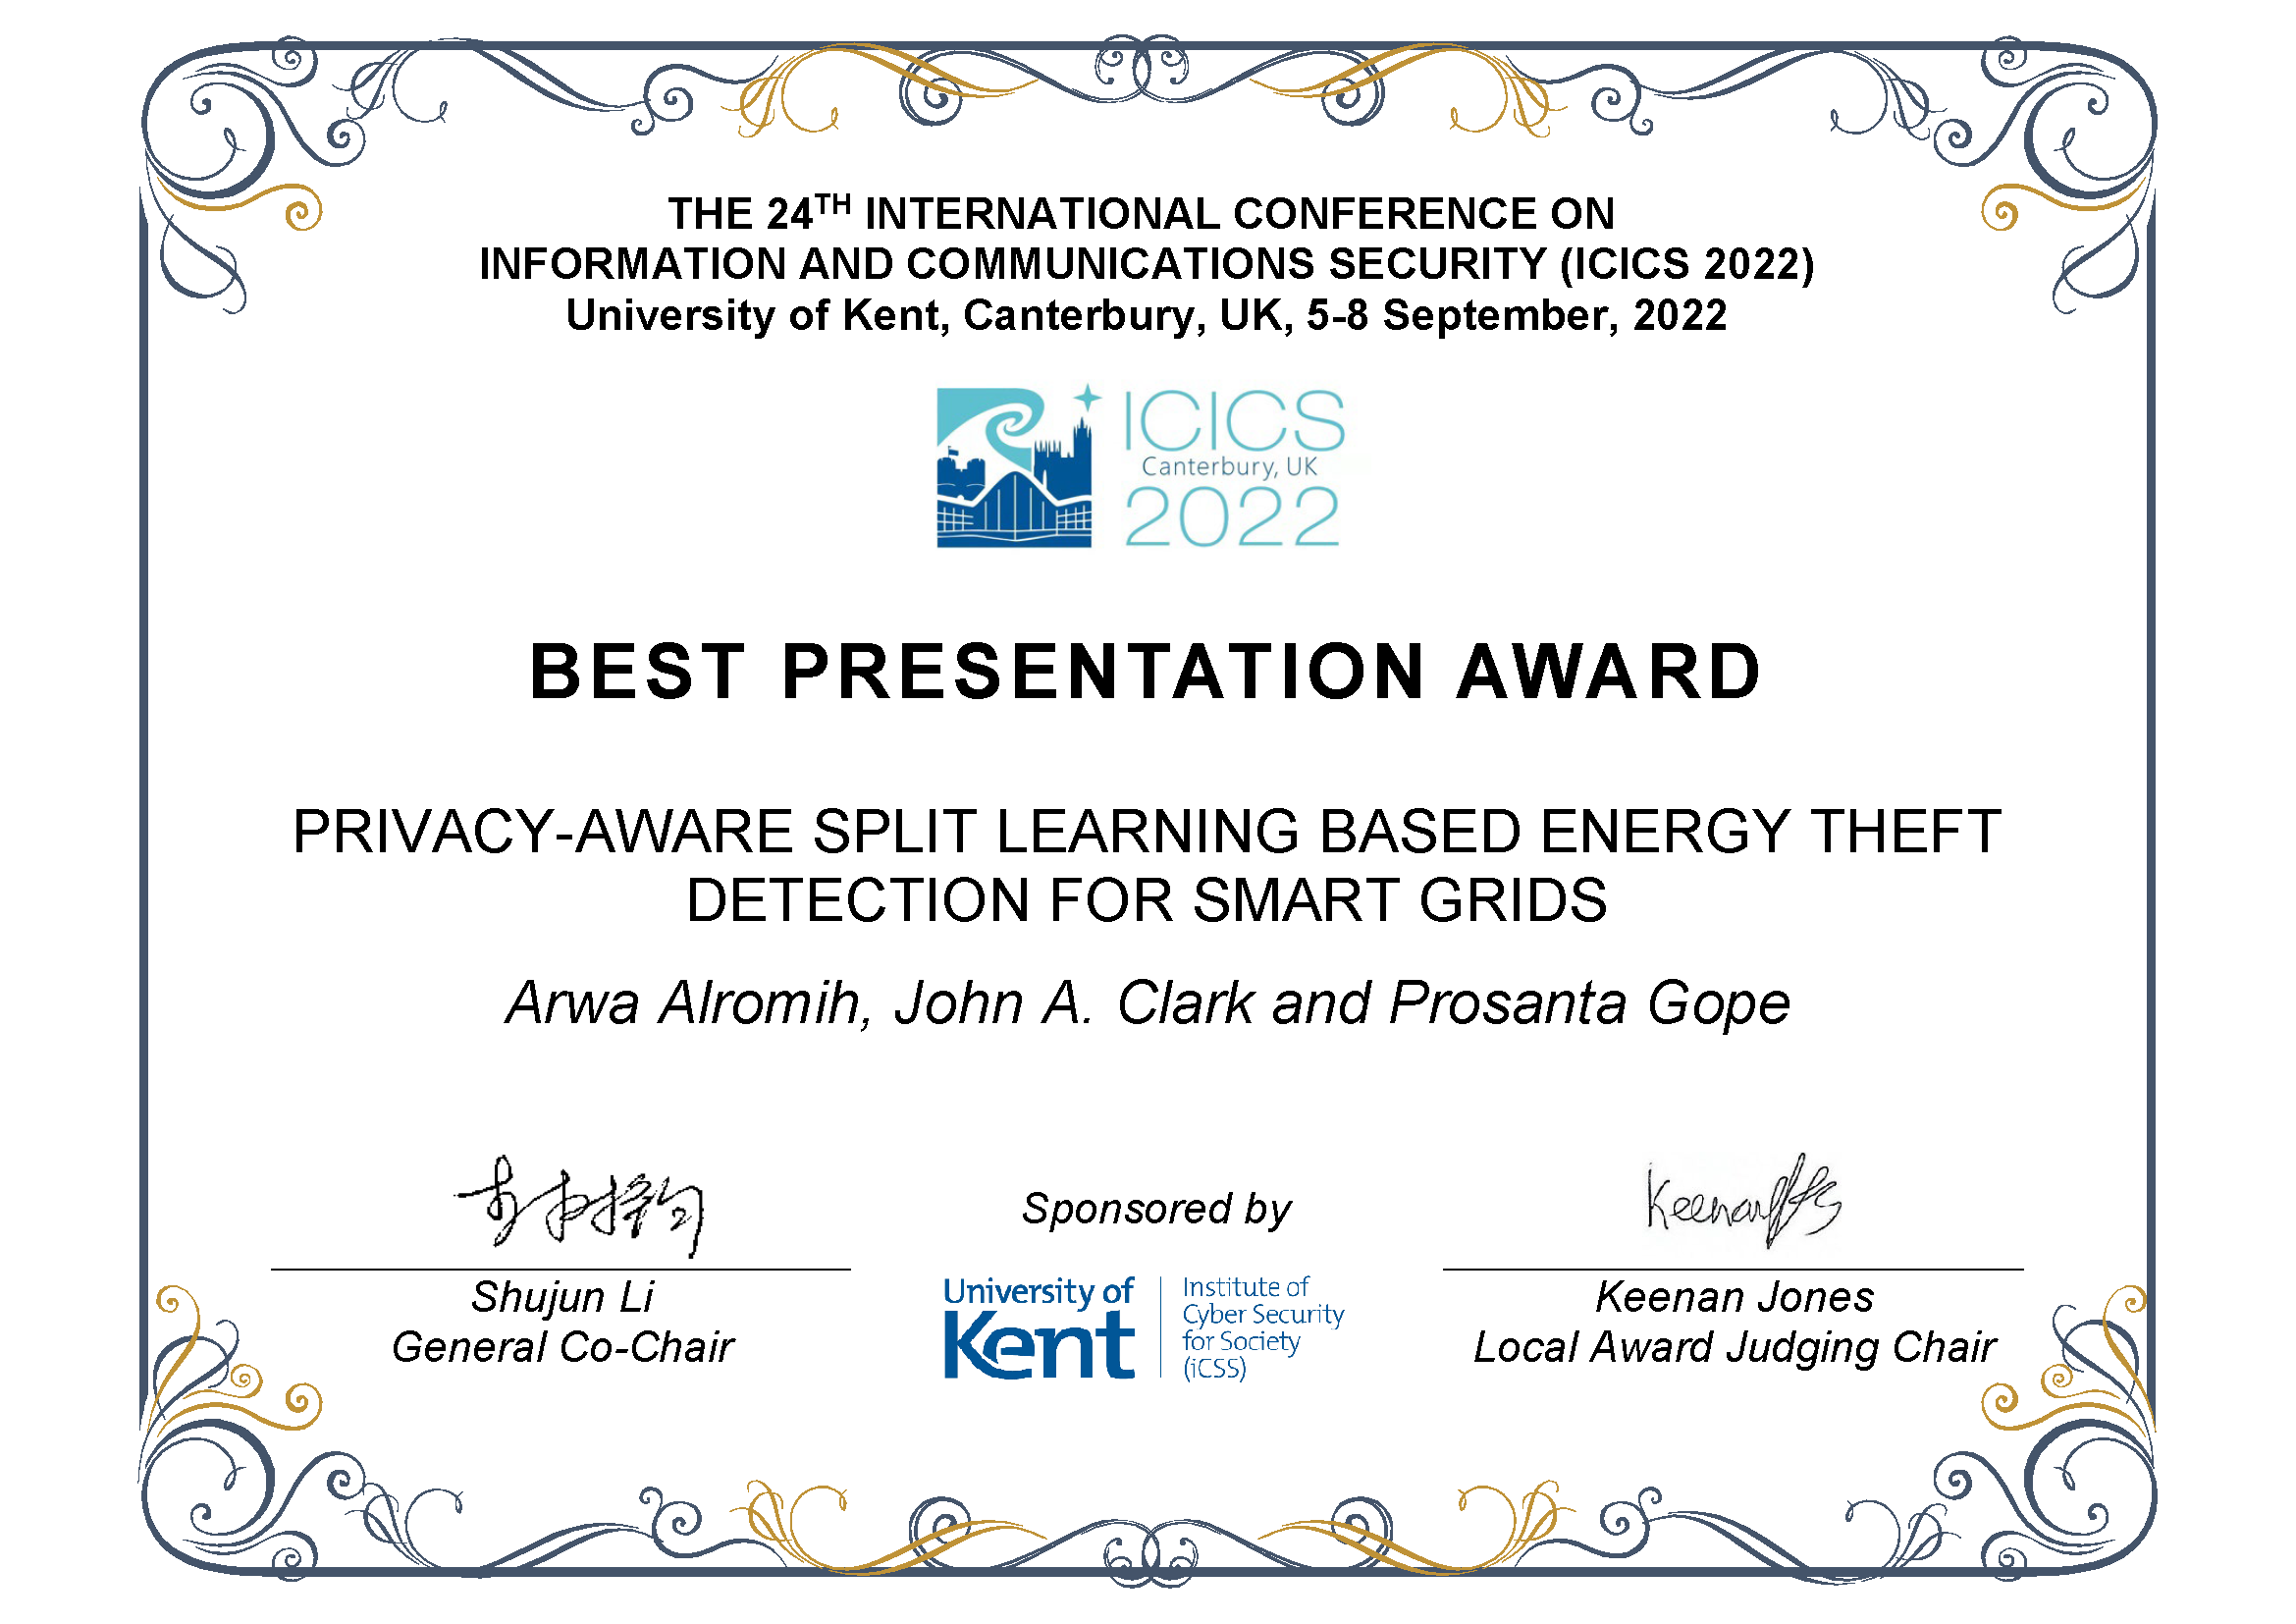 Certificate for ICICS 2022 Best Presentation Award